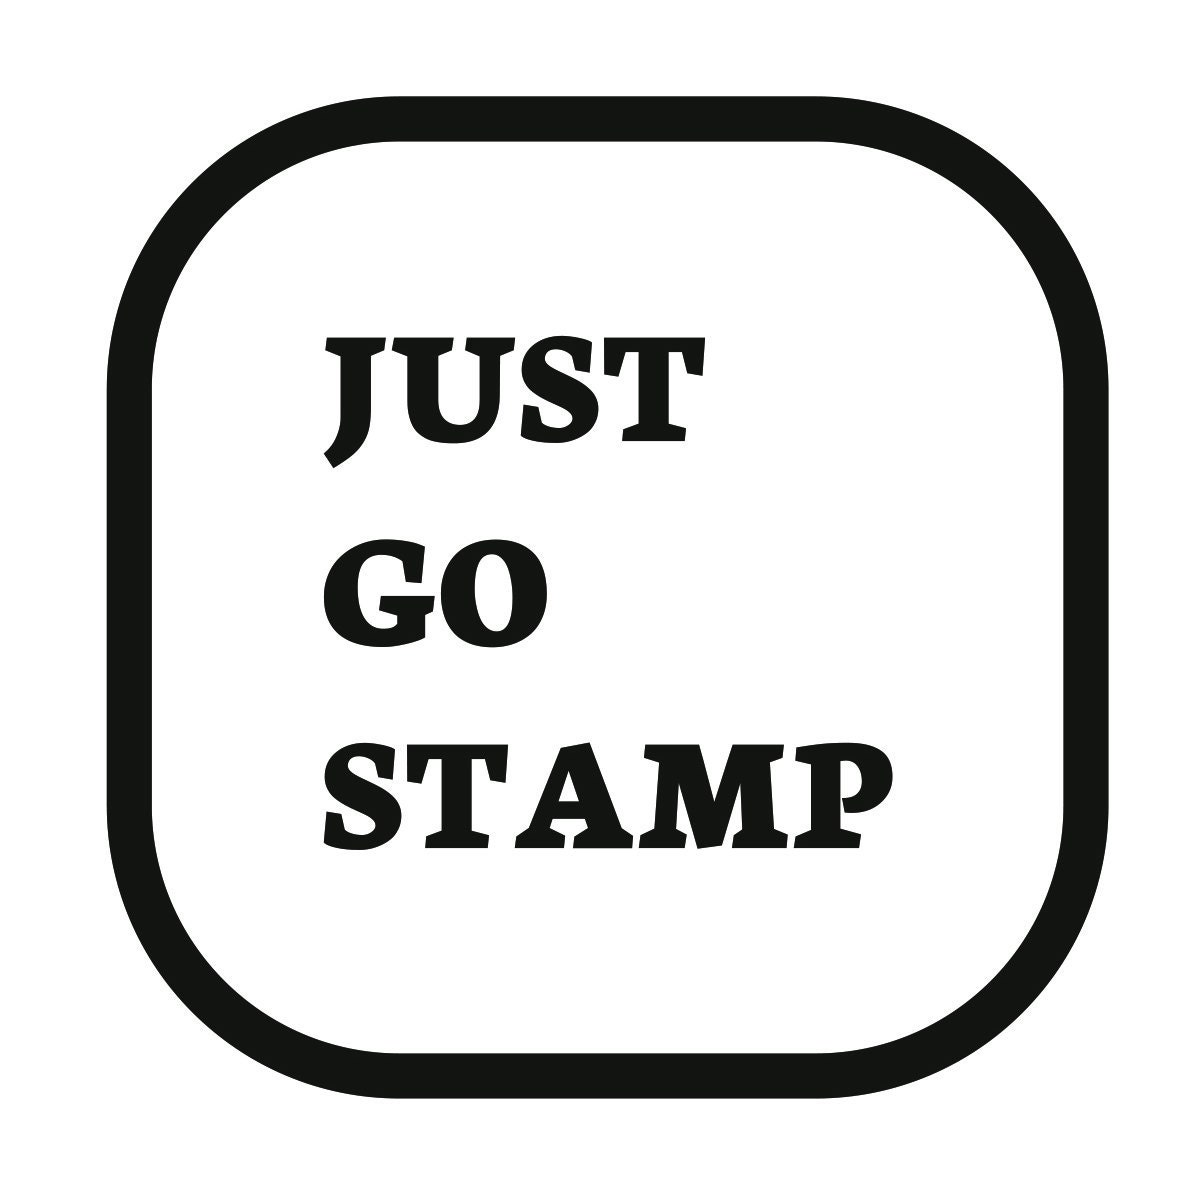 Loyalty Rubber Stamp, Mini Stamp, Logo Stamp, Custom Stamp